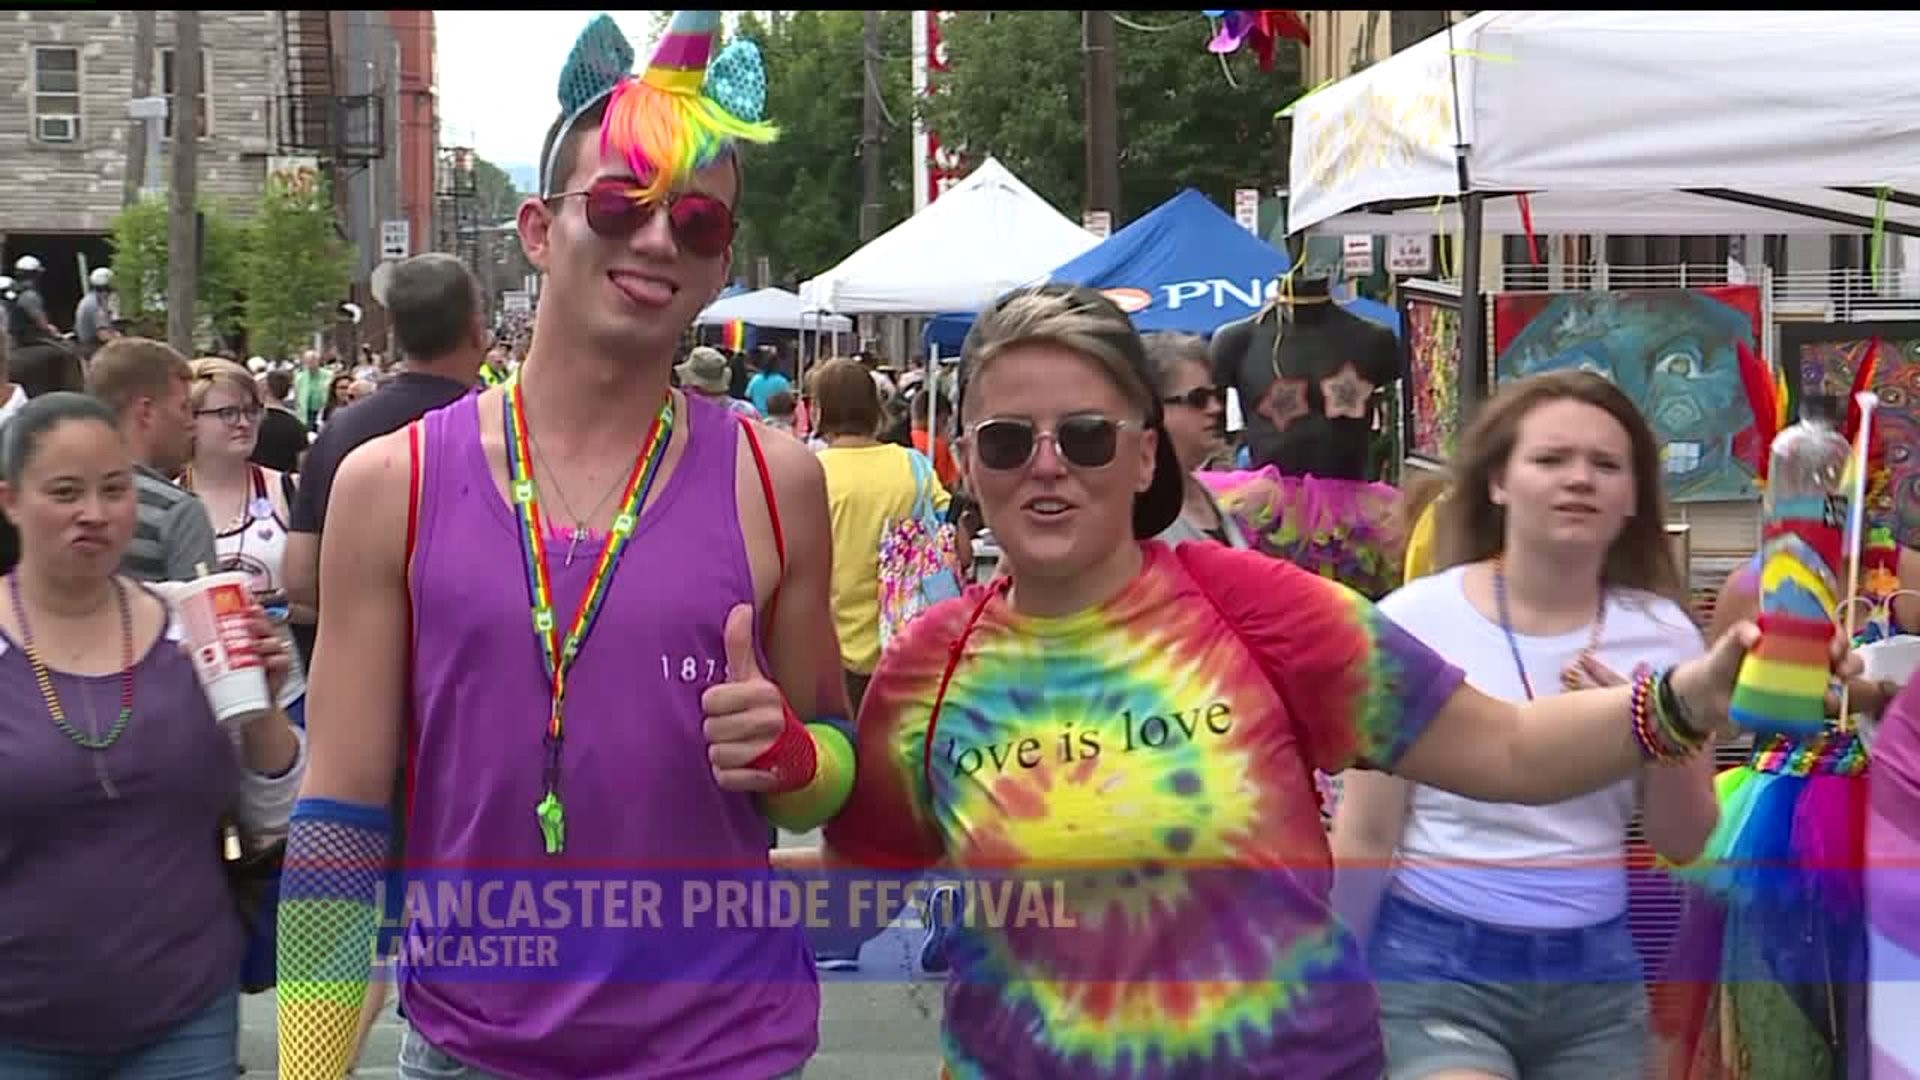 Lancaster pride festival shuts down parts of city